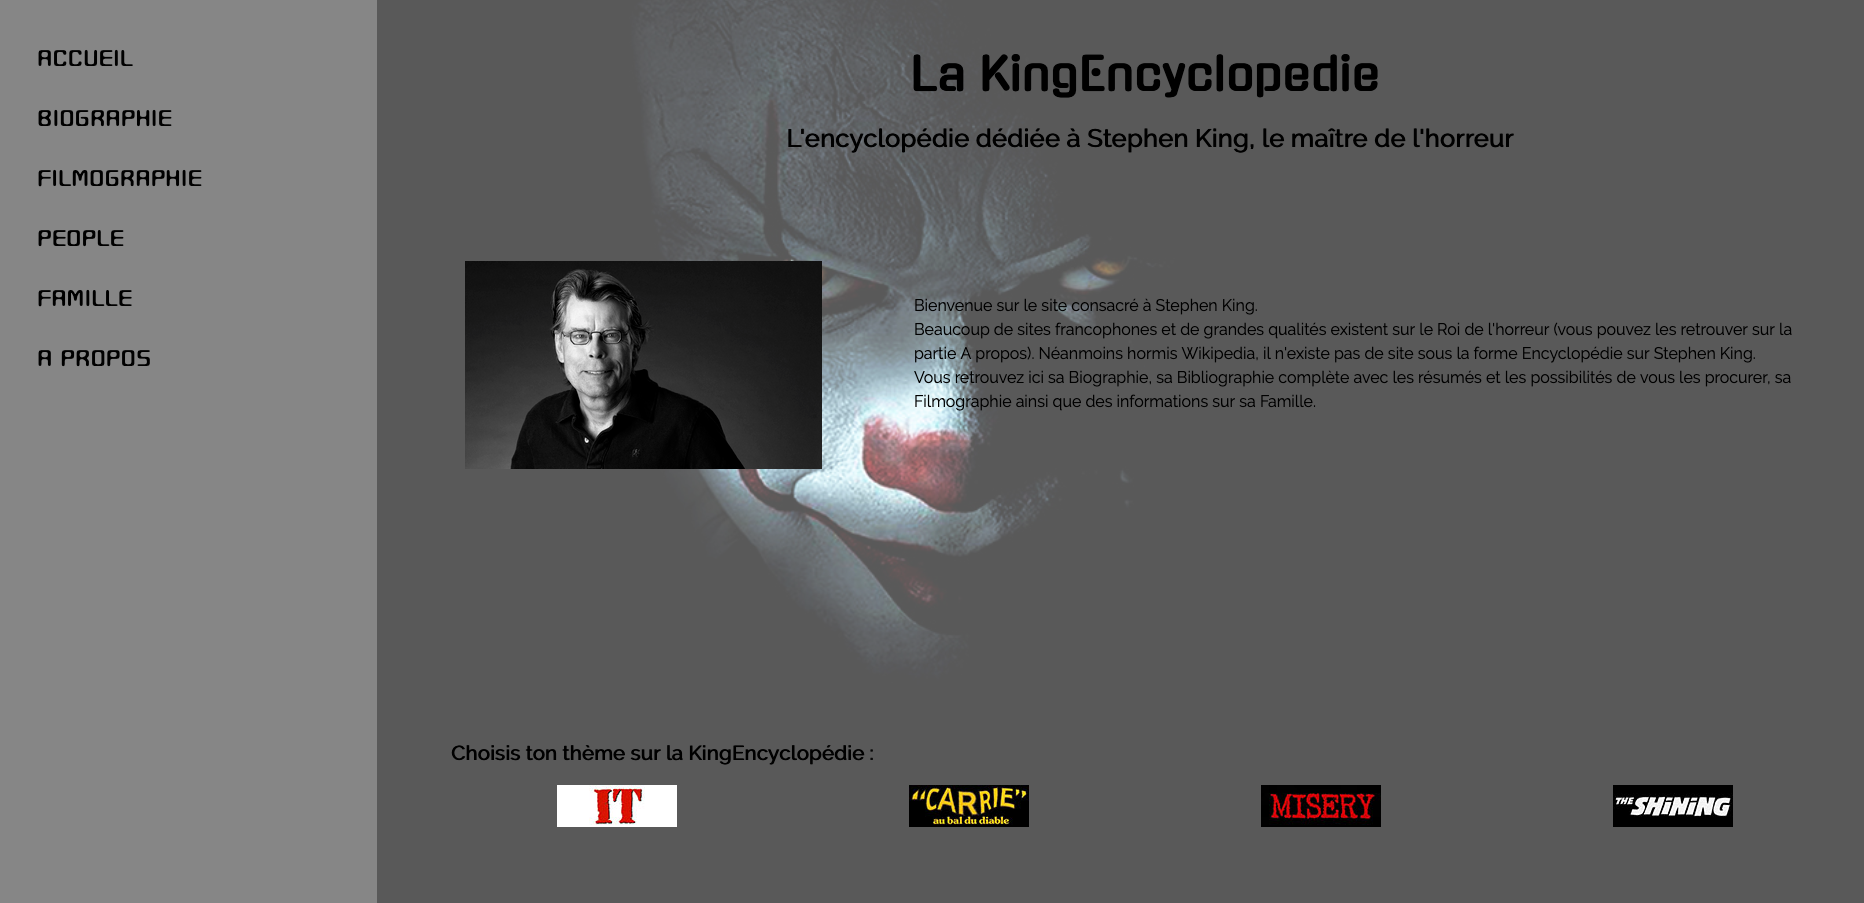 Projet Encyclopédie sur Stephen King